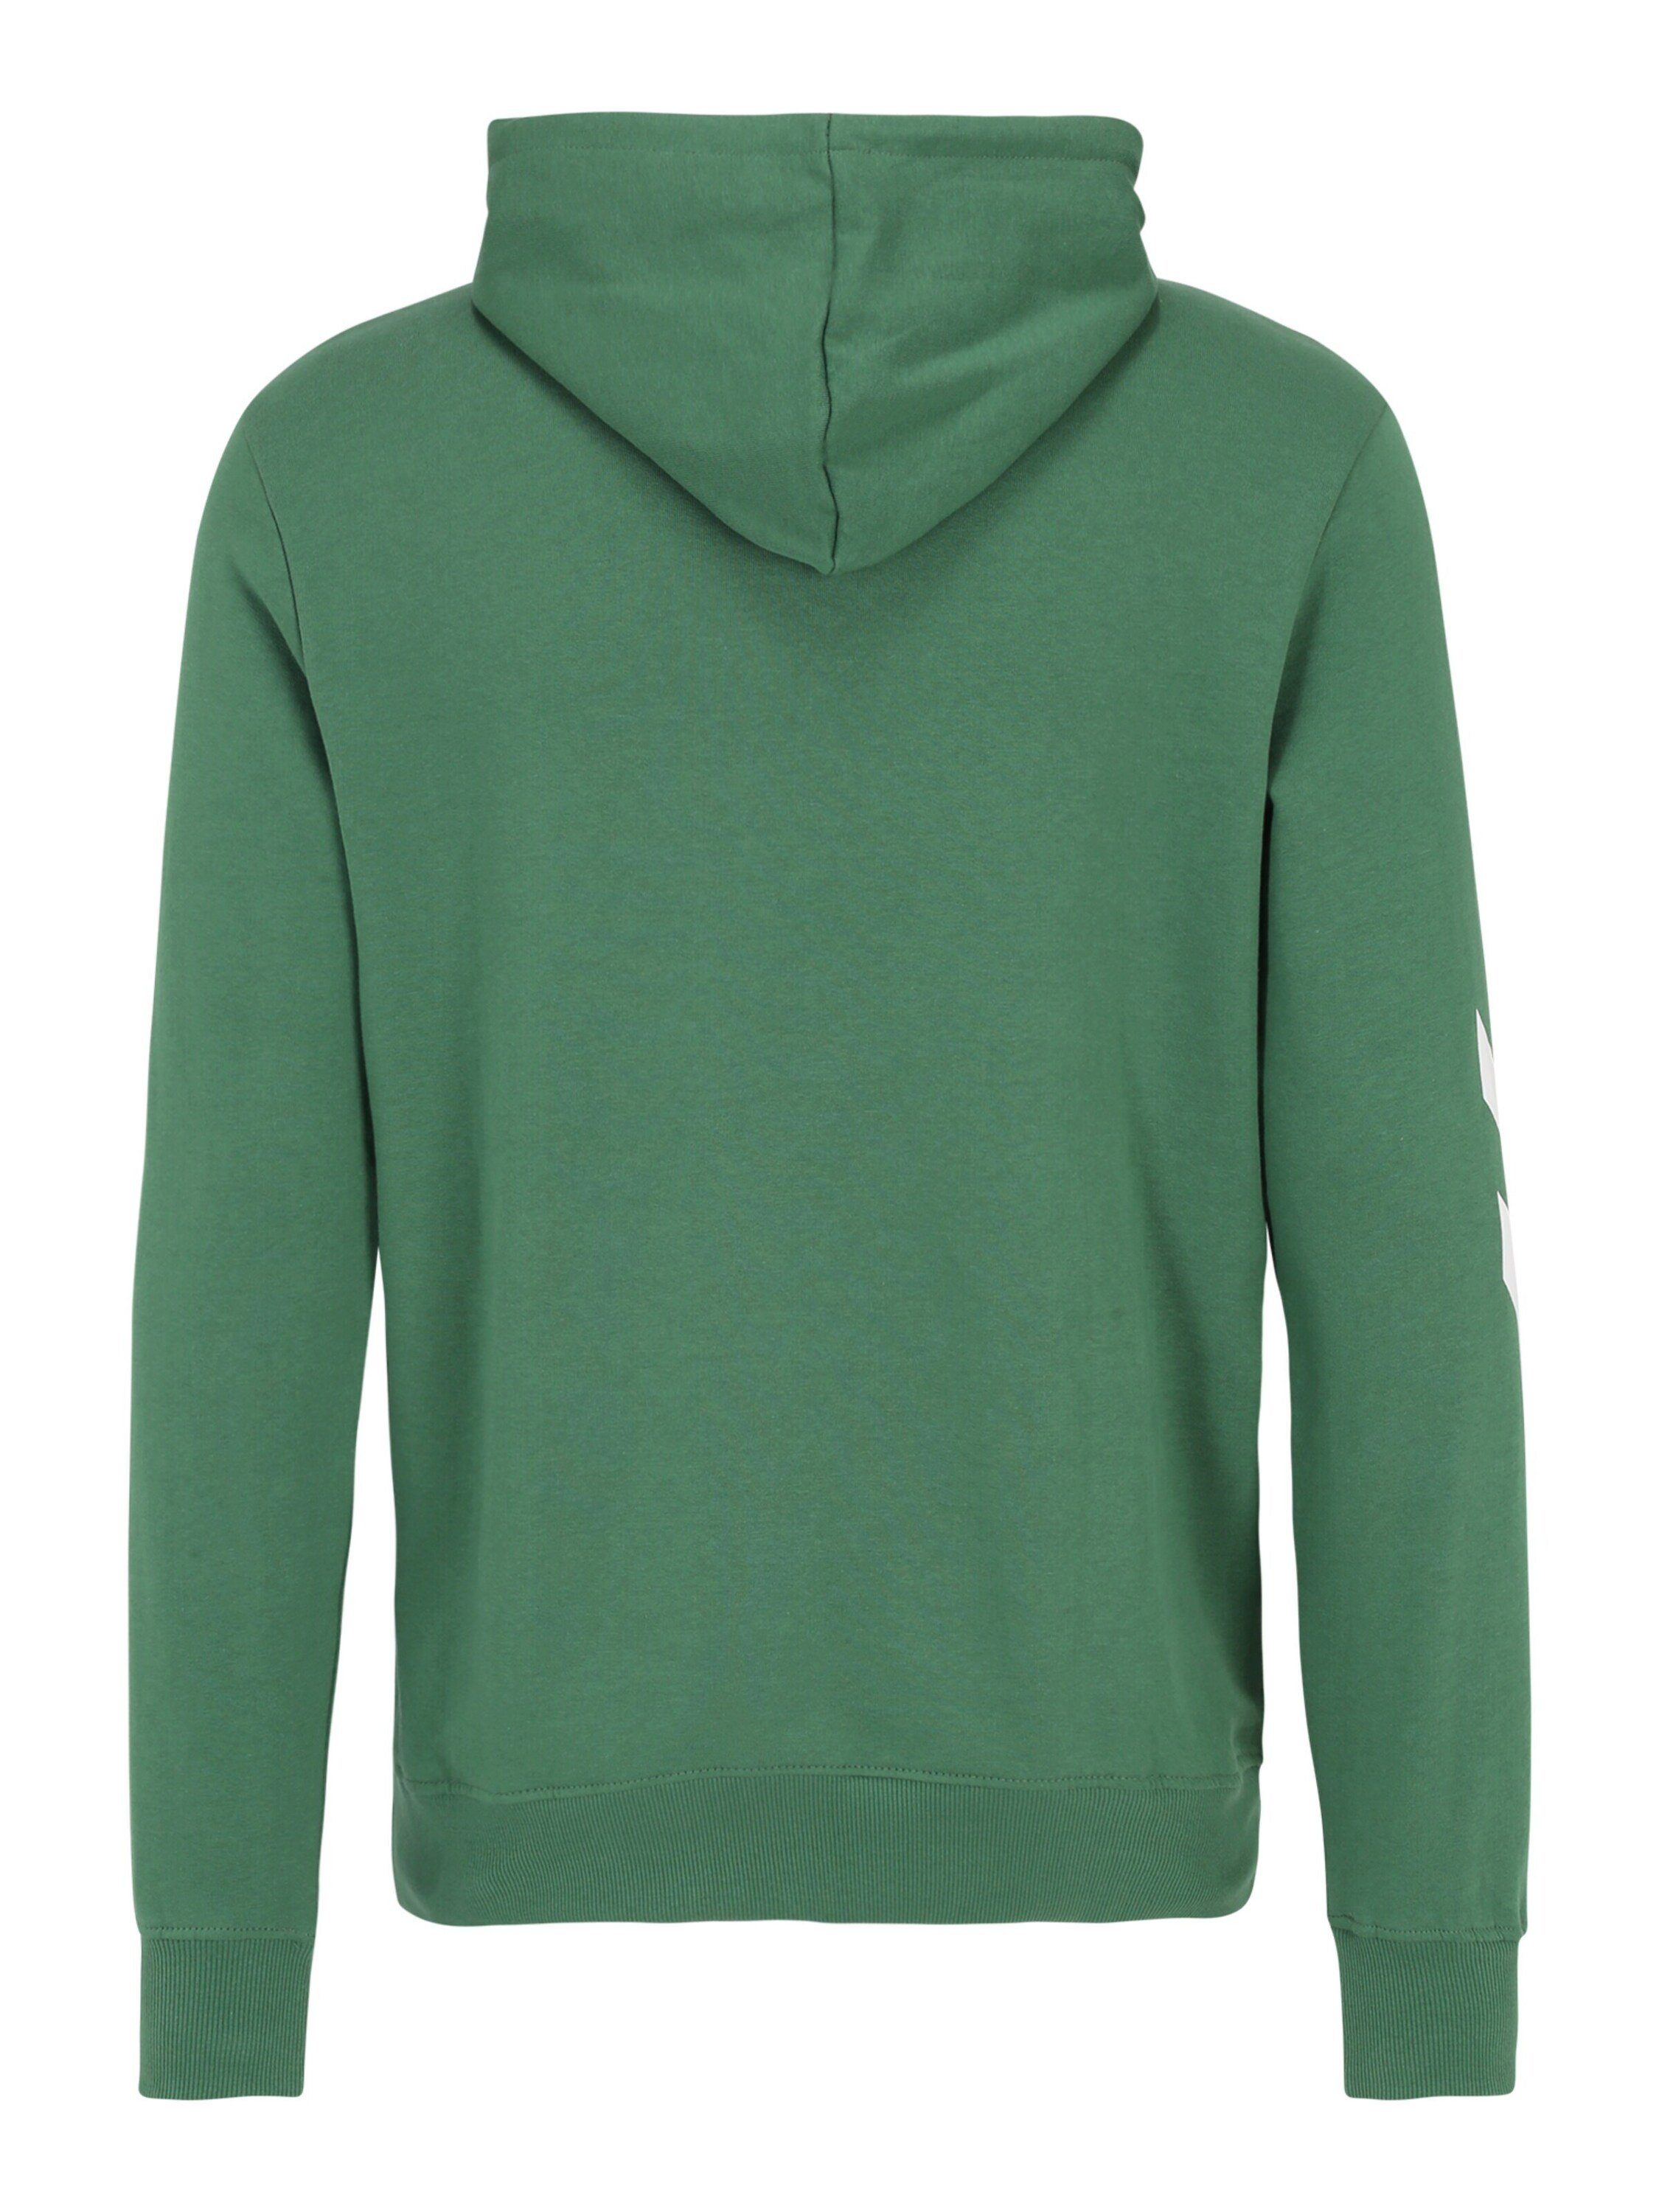 hummel Plain/ohne Details Grün (1-tlg) Sweatshirt